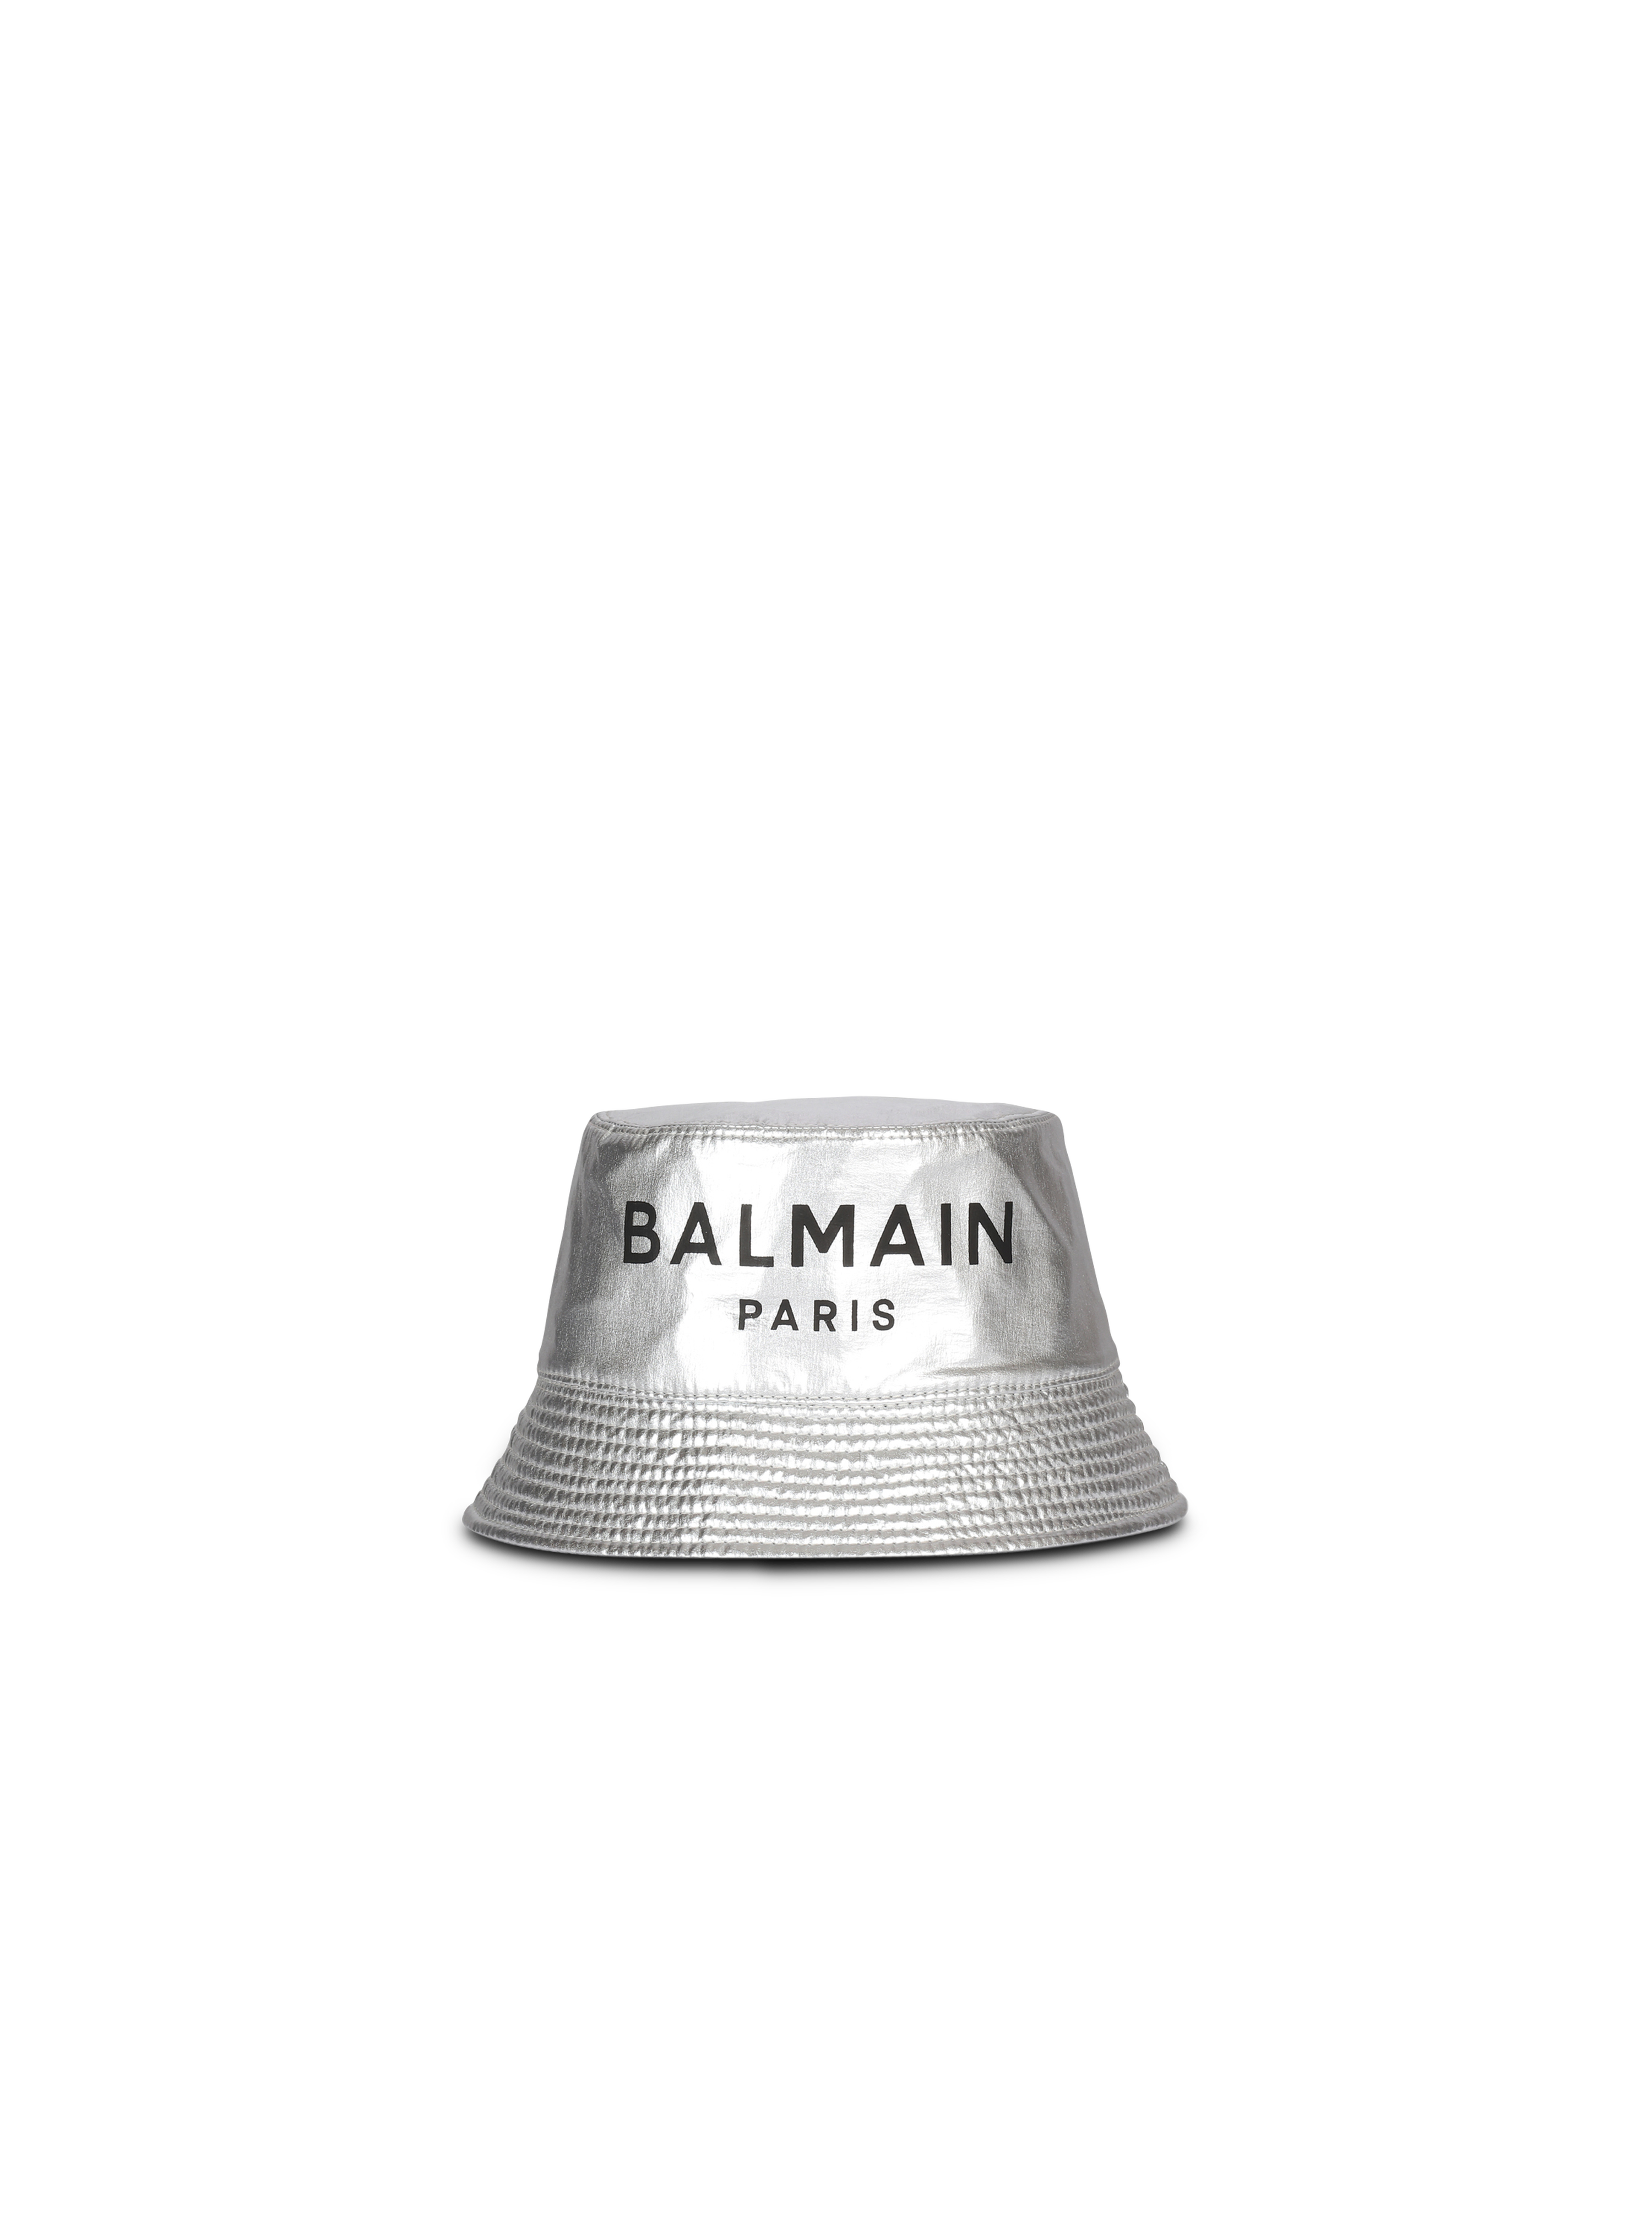 Balmain巴尔曼标志渔夫帽, silver